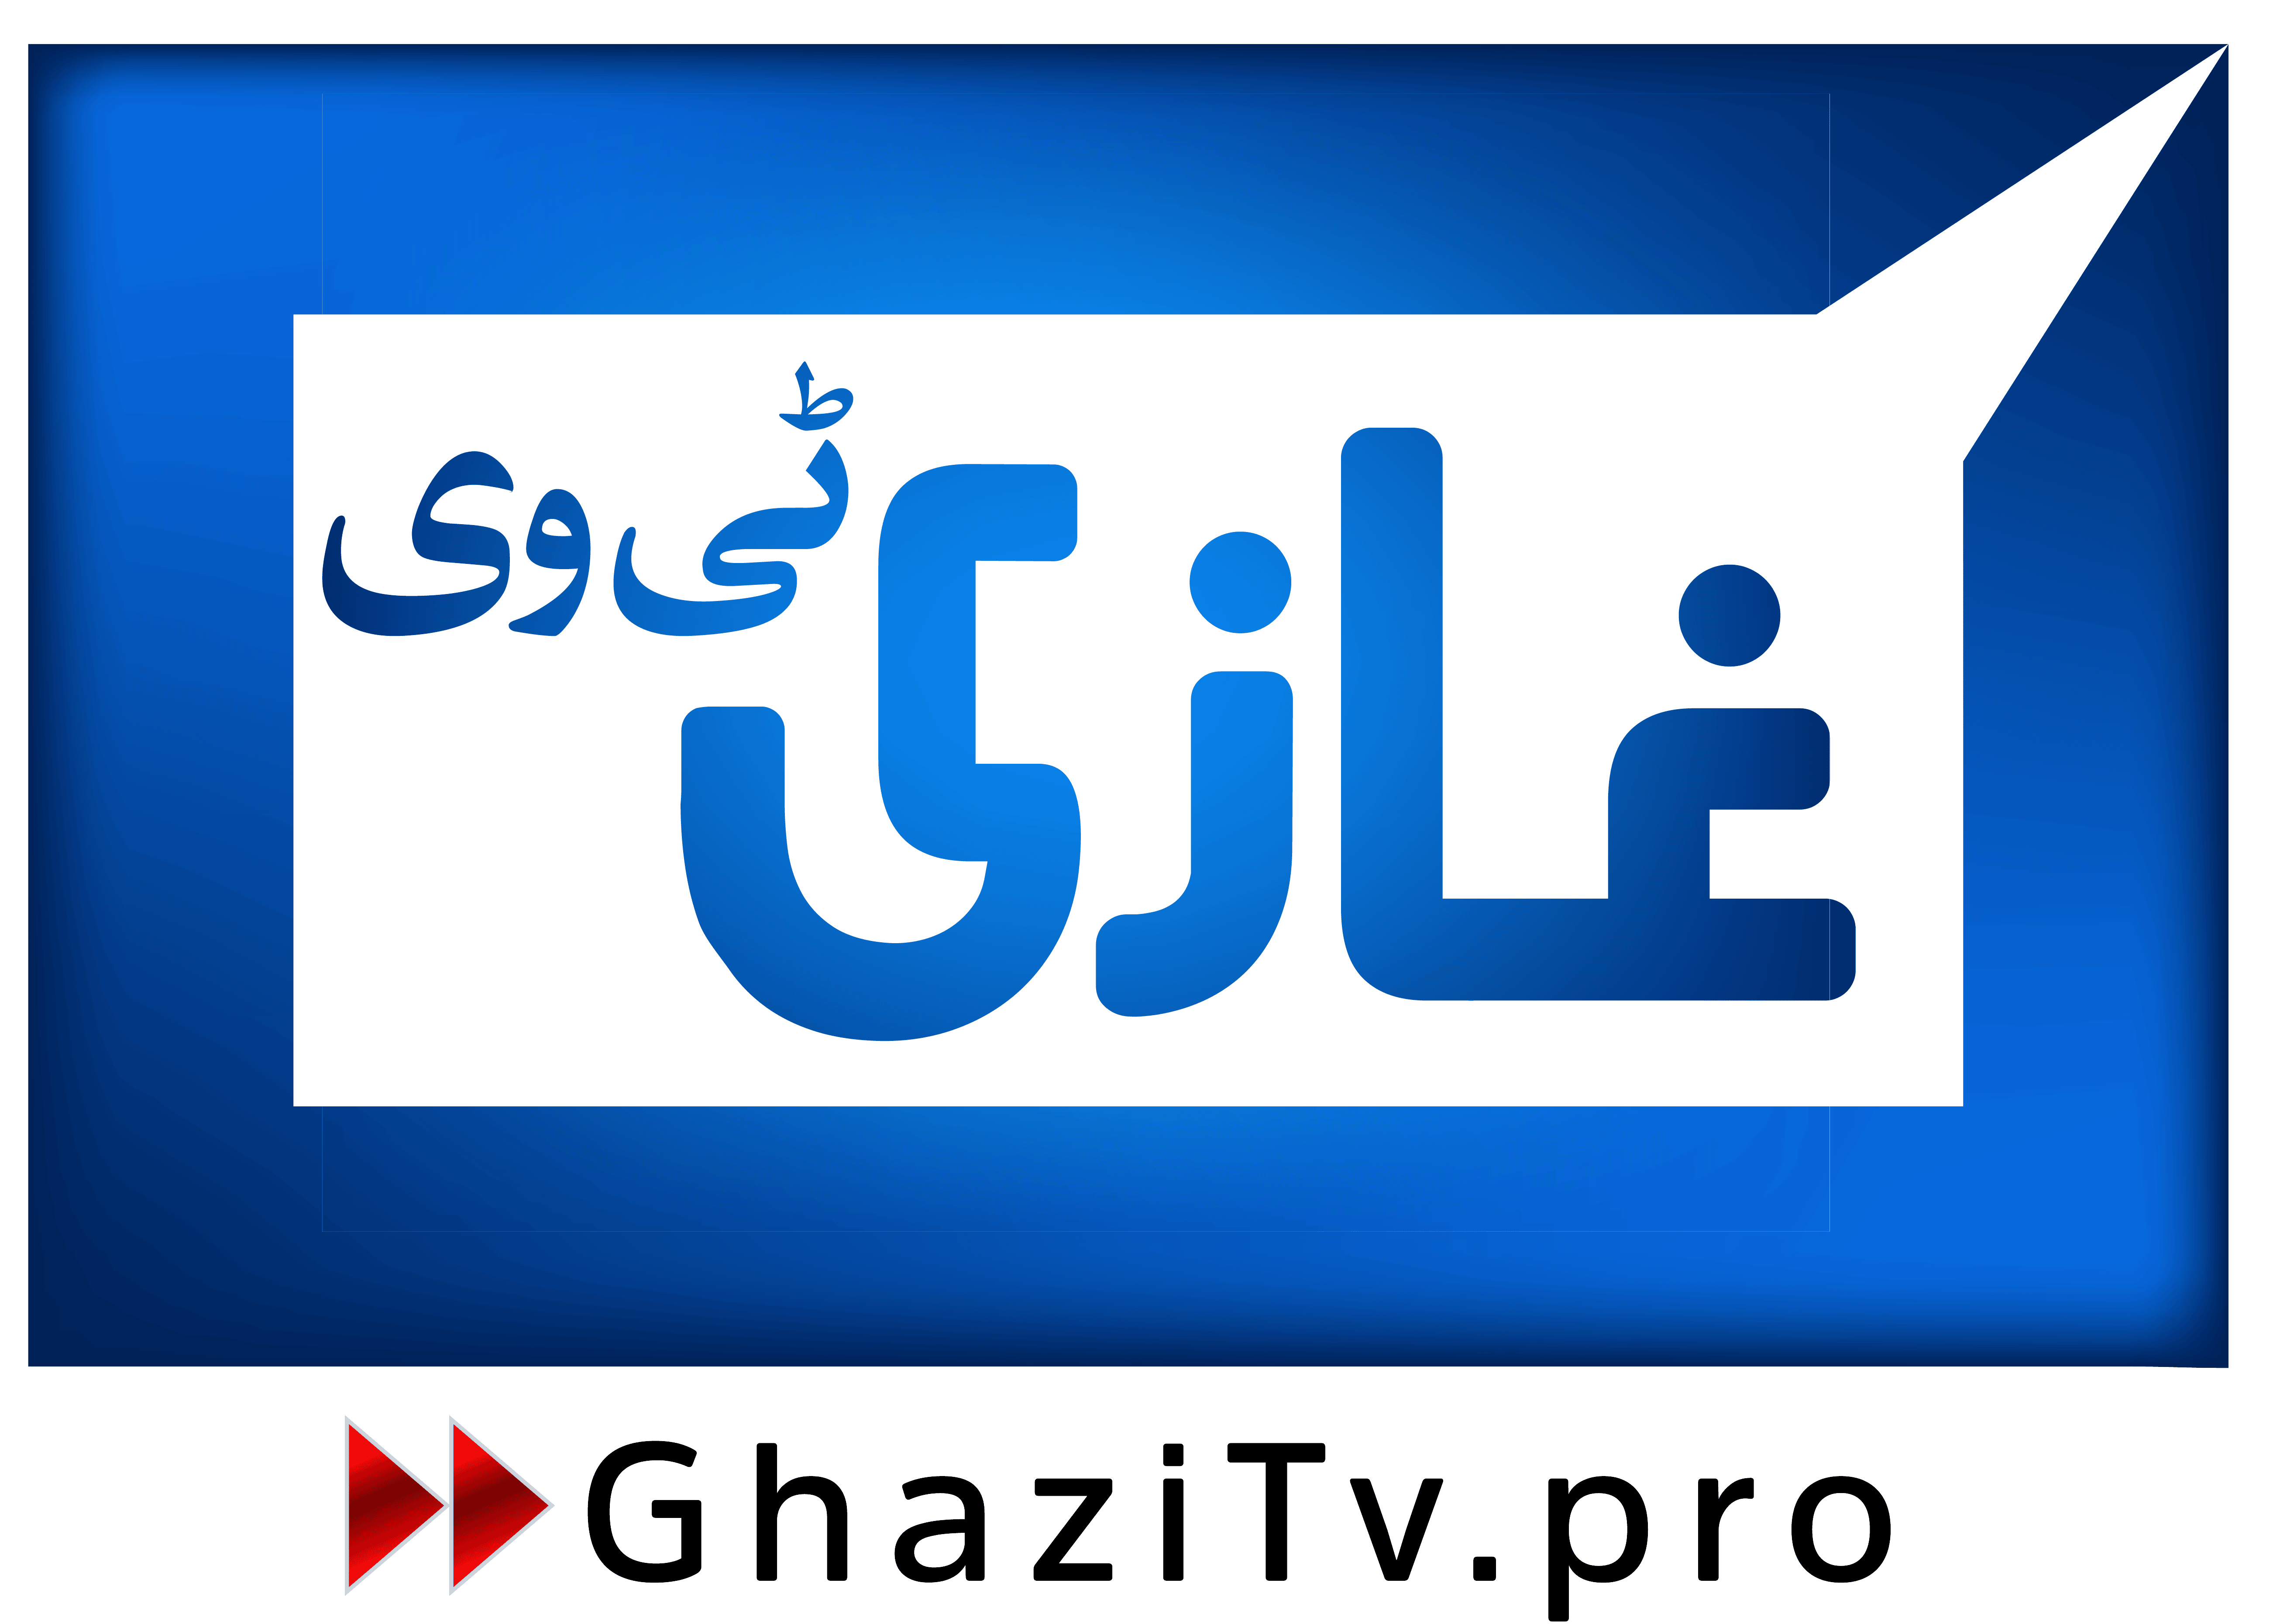 Ghazi Tv